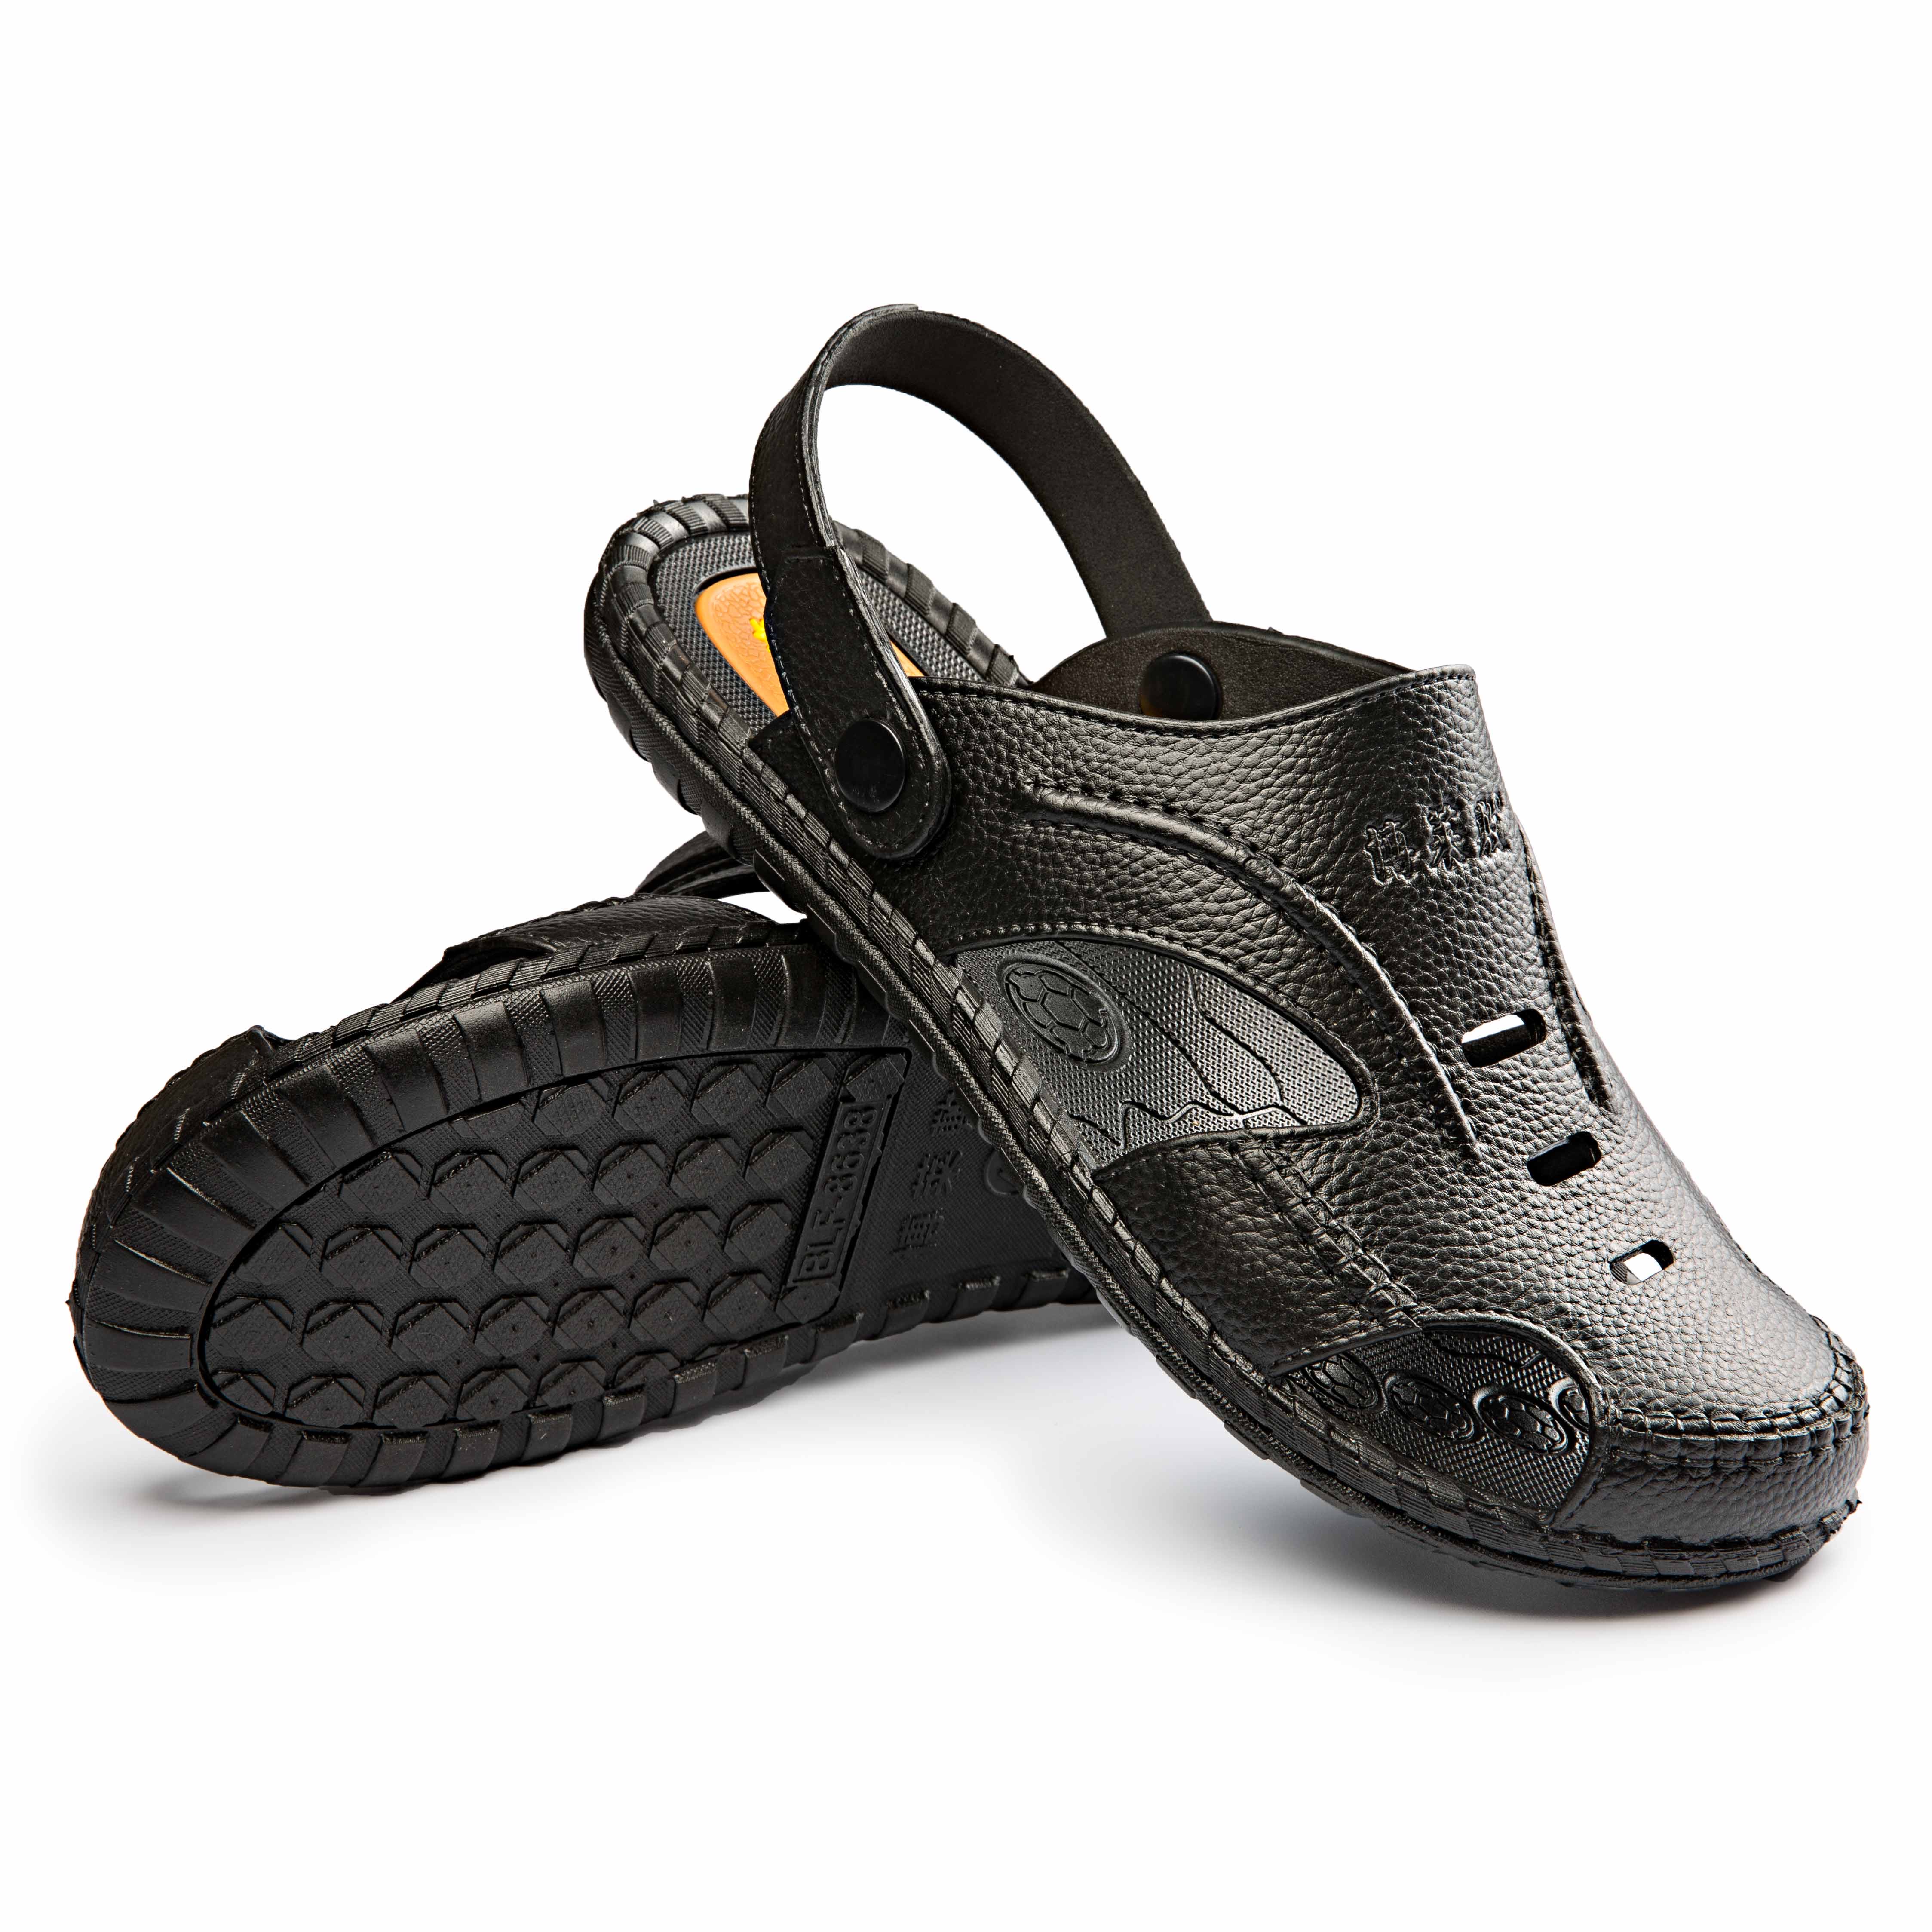 Vofox Fashion Summer Outdoor Non-slip Wearable Beach Sandals Casual ...